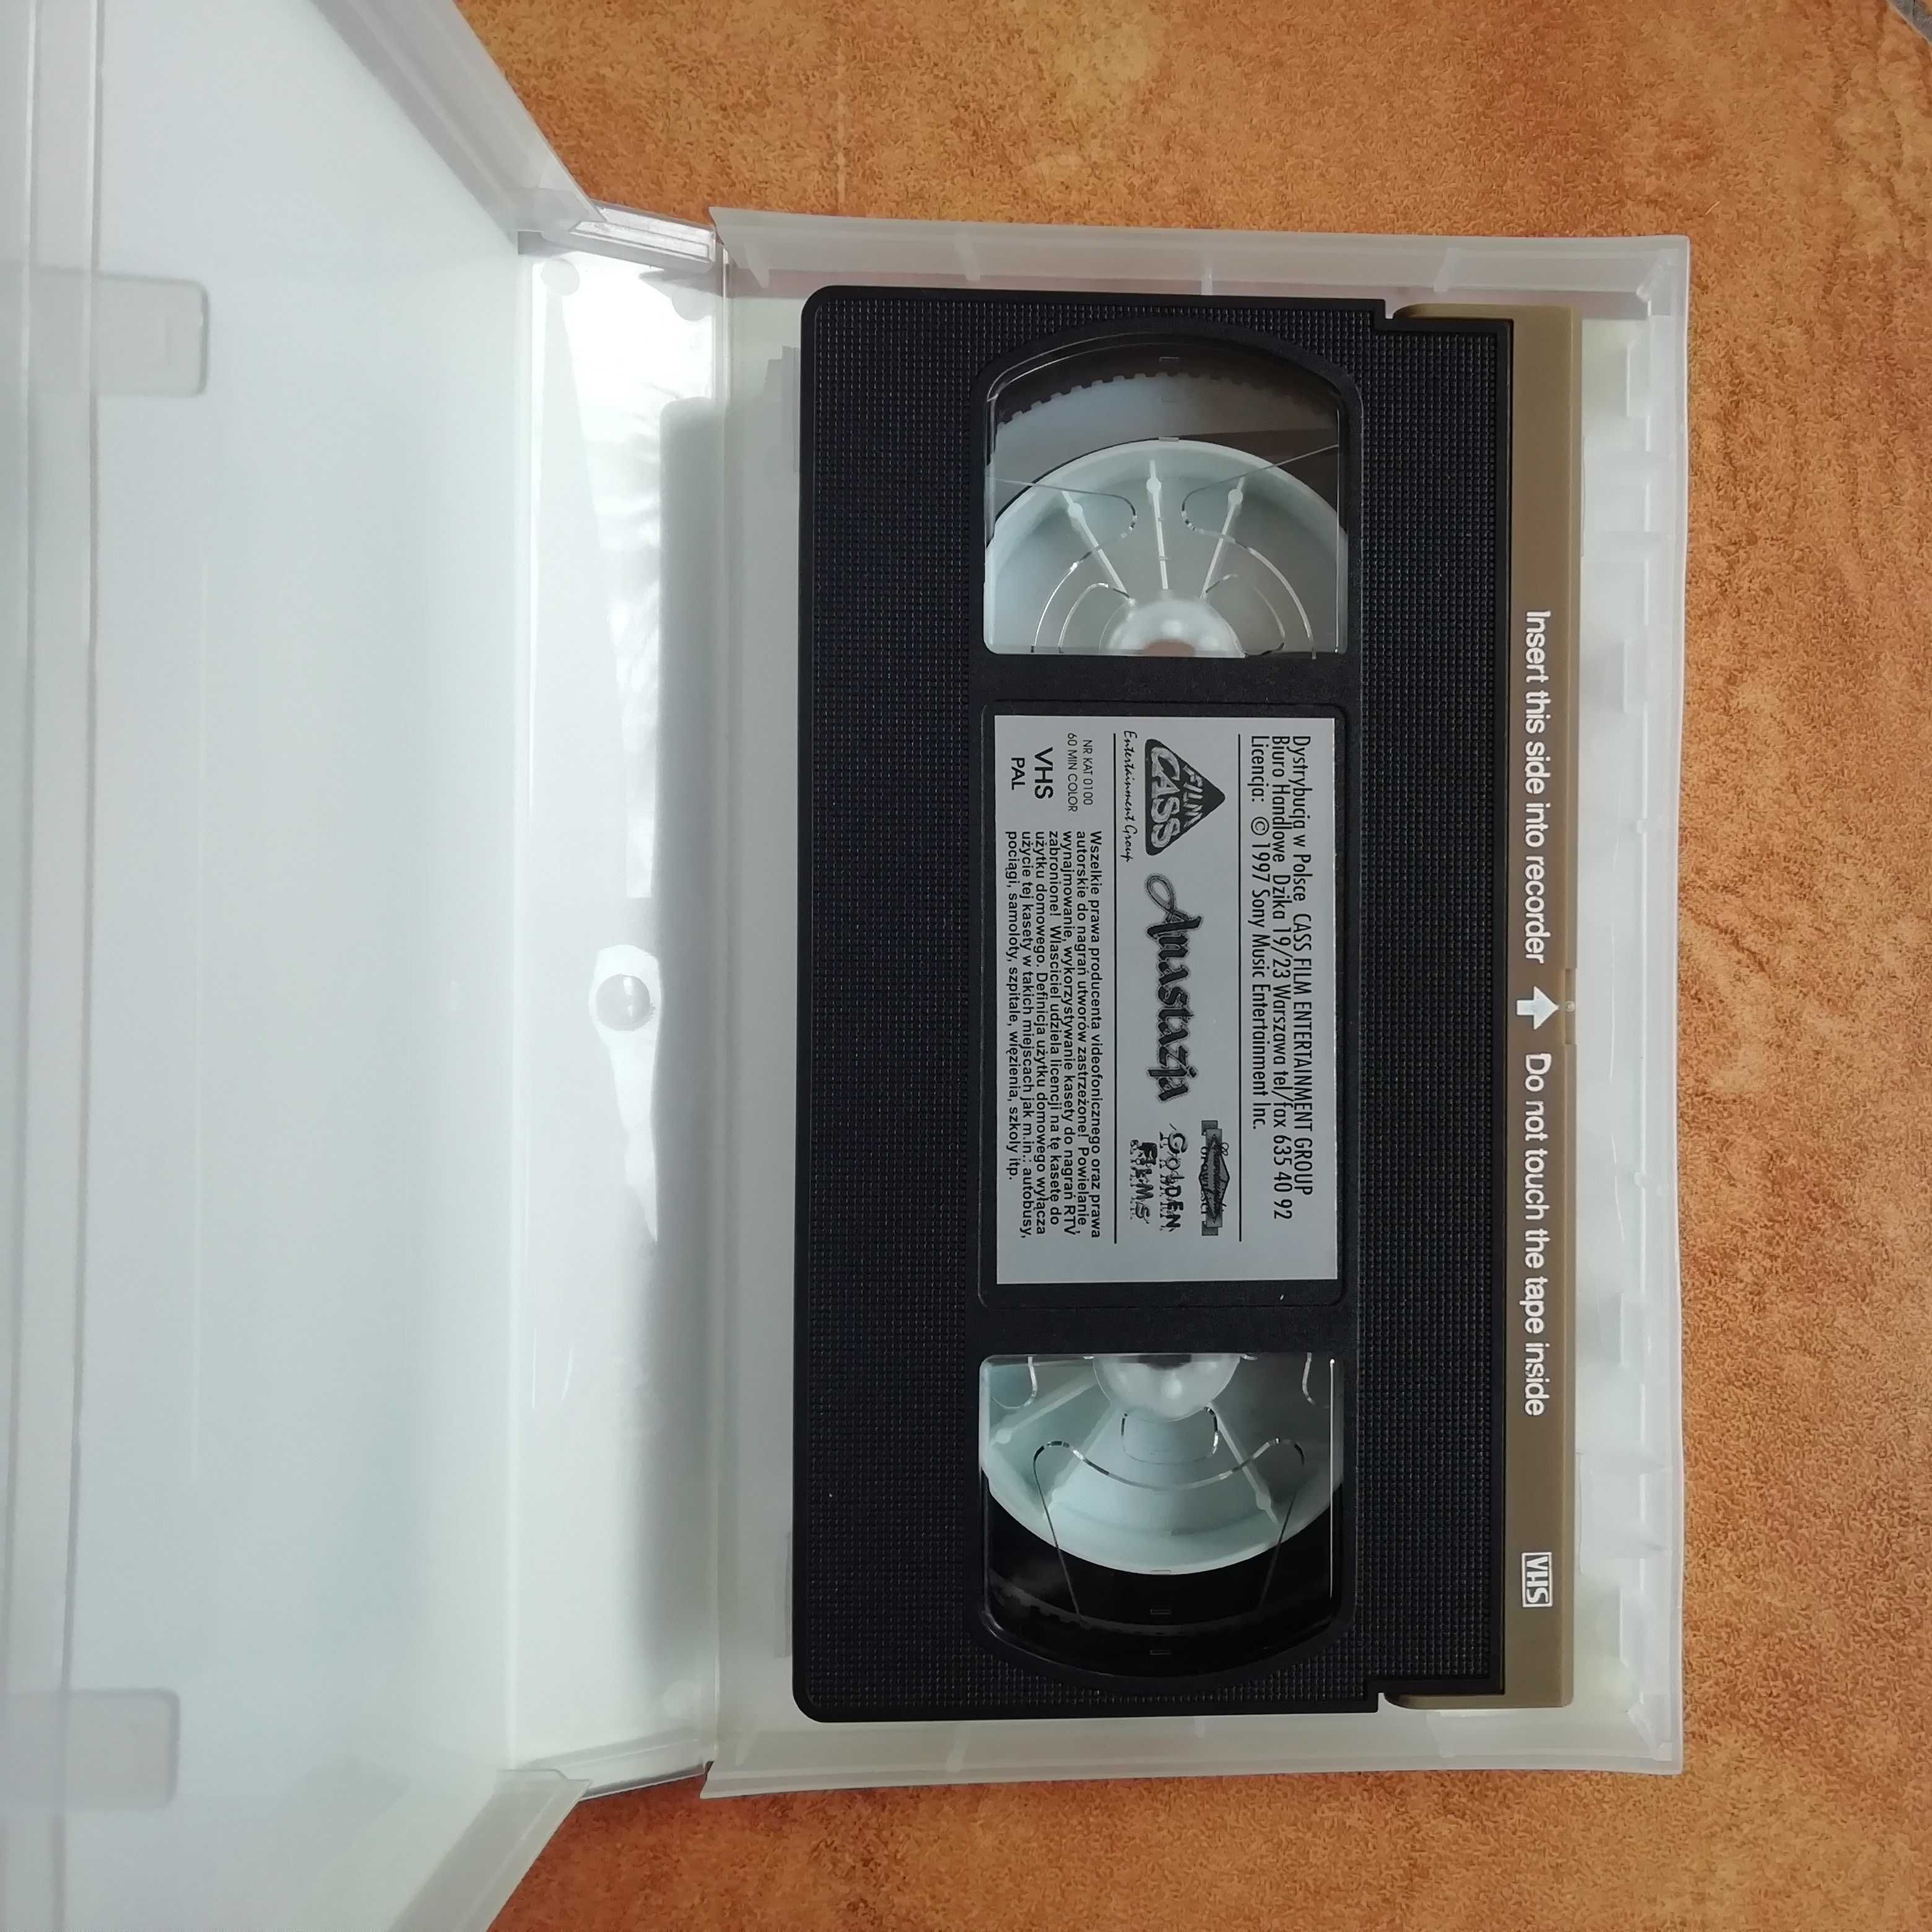 Bajka Anastazja kaseta VHS